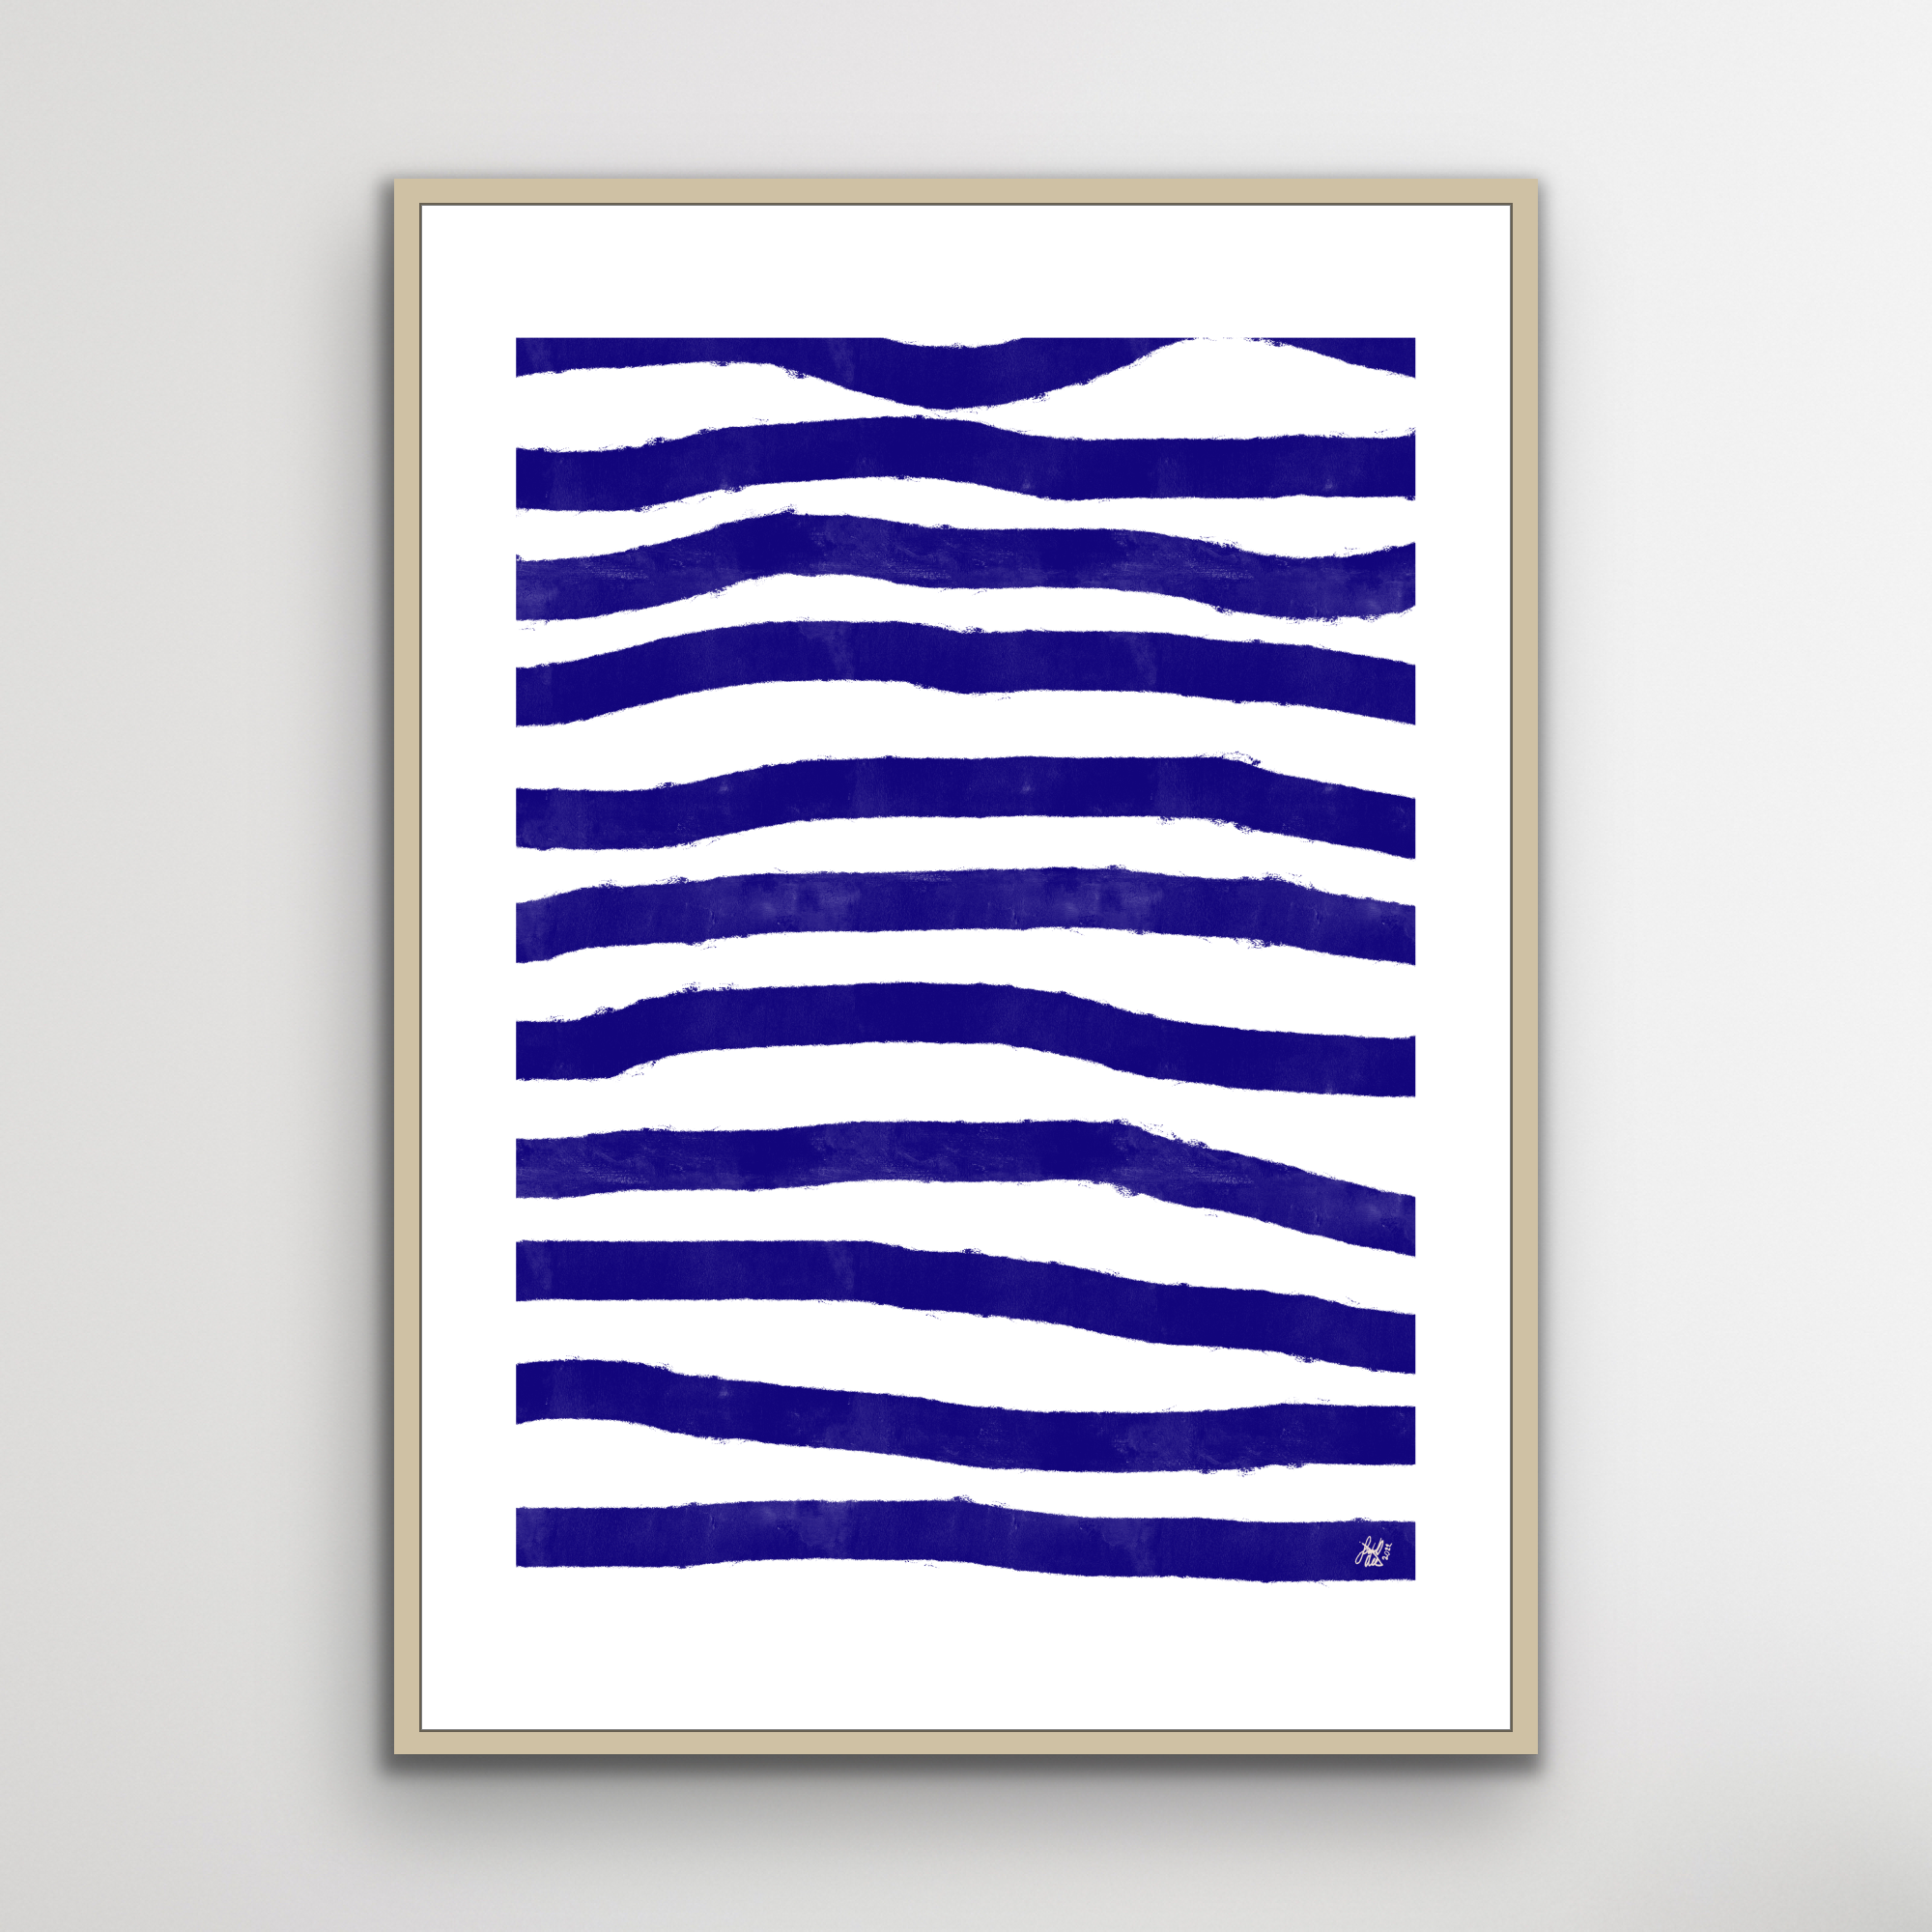 Poster: "Blue Stripes"